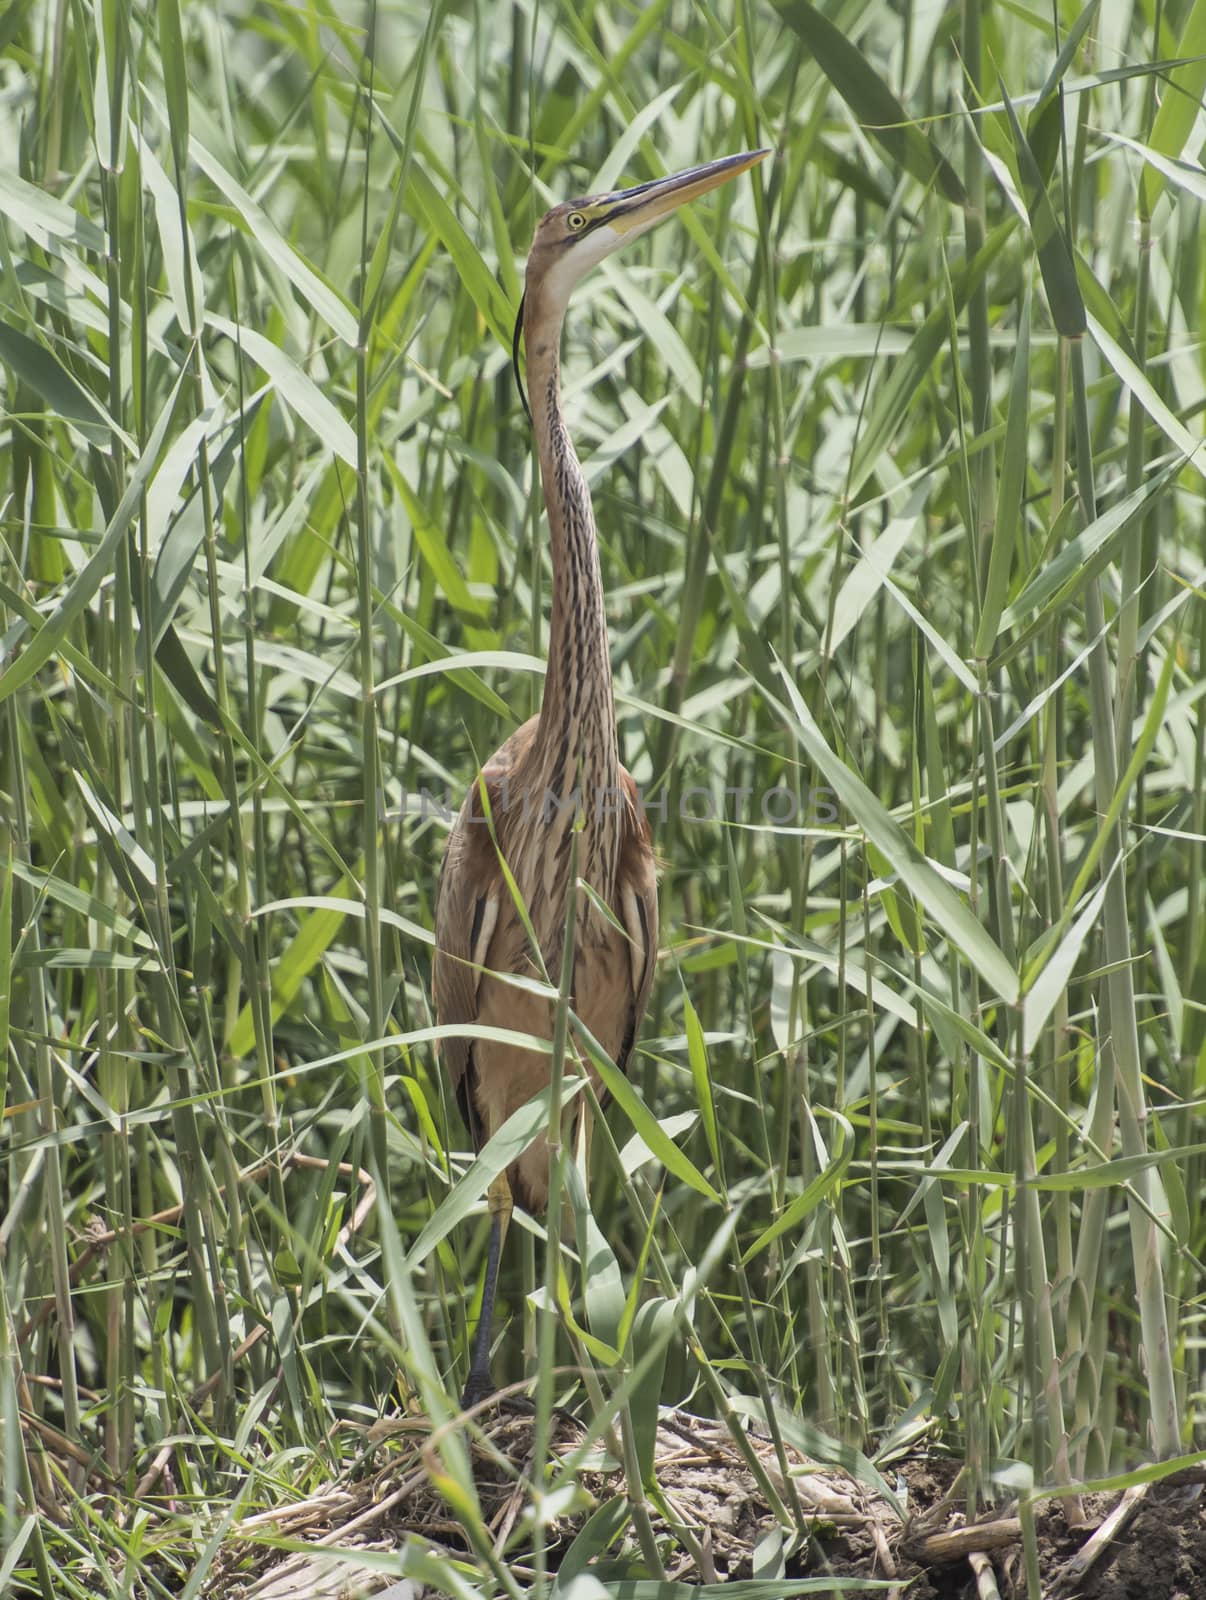 Grey heron ardea cinera stood on reeds and plants in rural riverbank scene